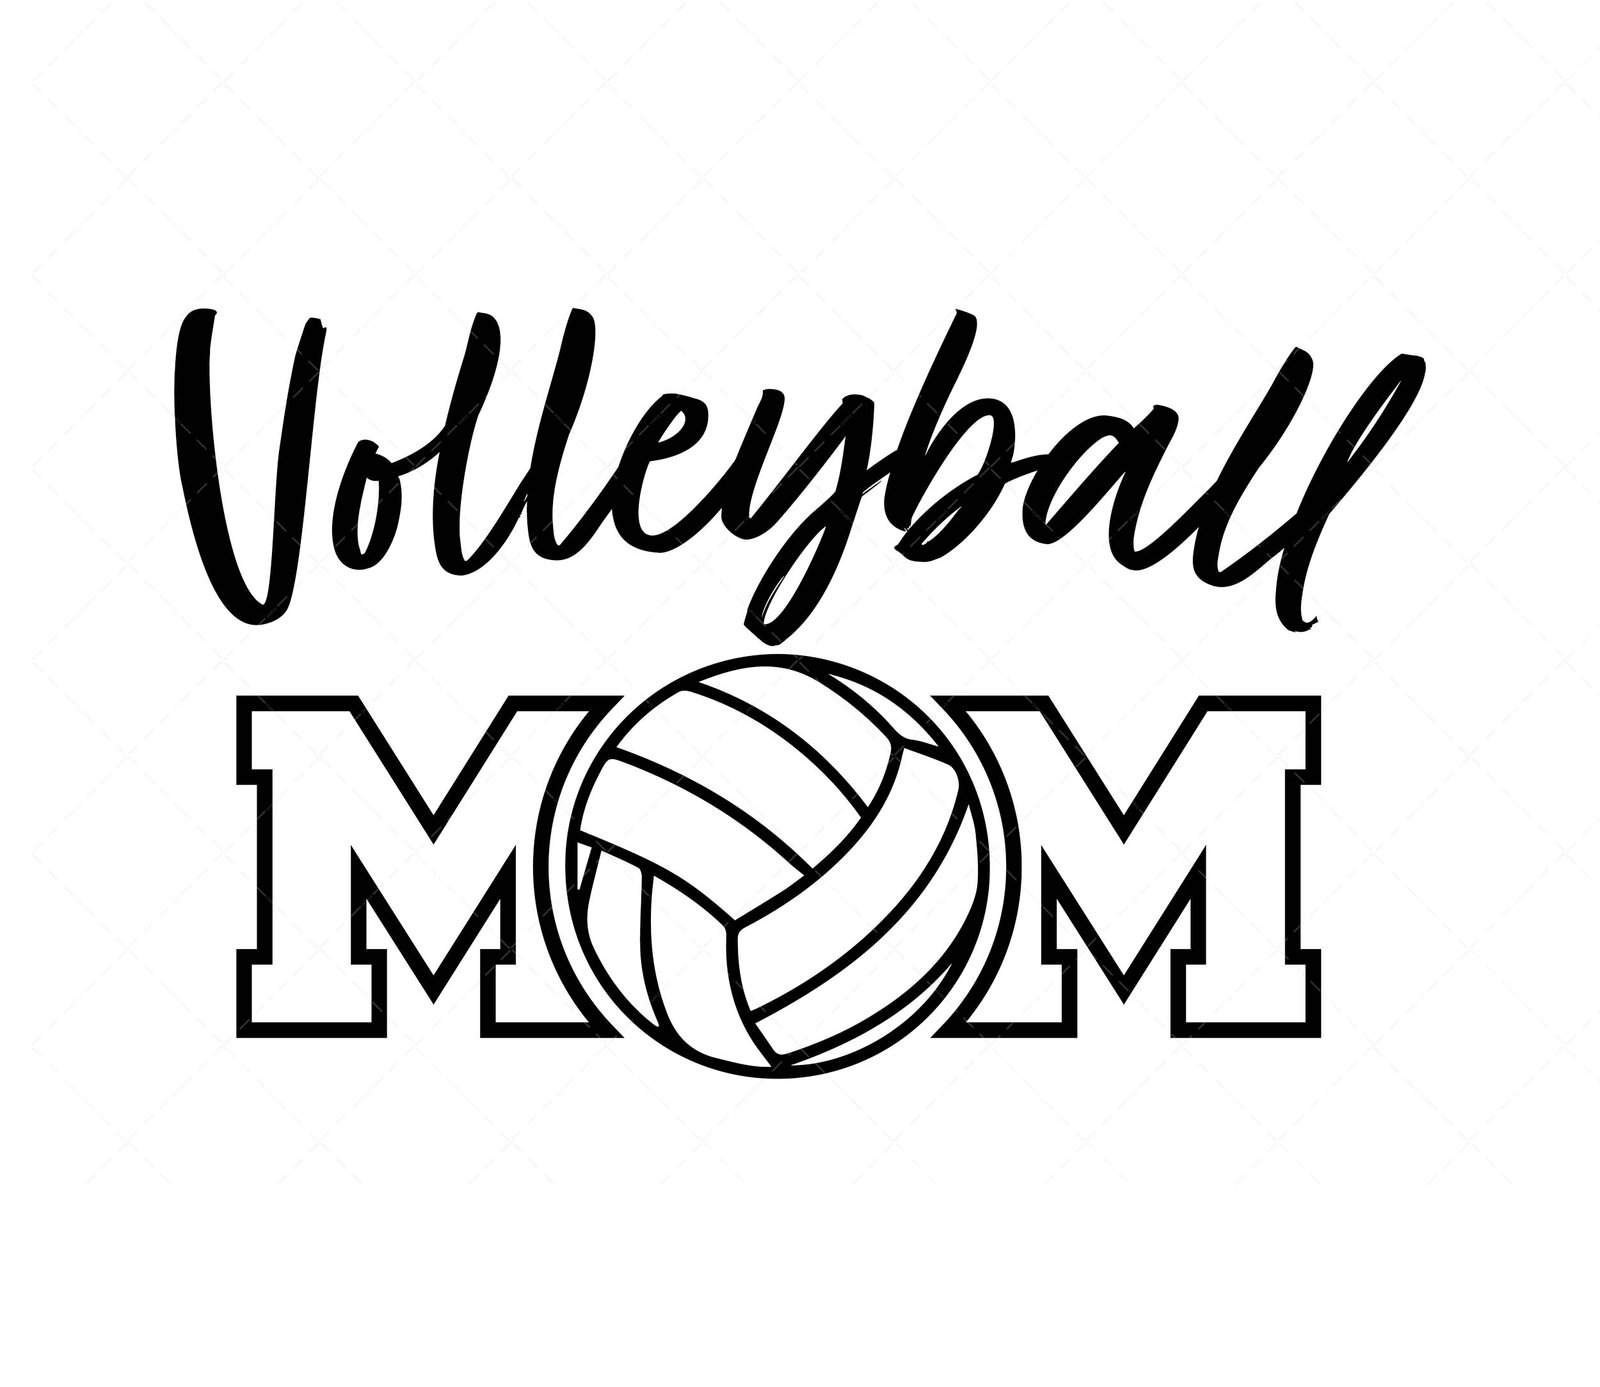 Volleyball mom SVG, PDF, PNG, Volleyball SVG